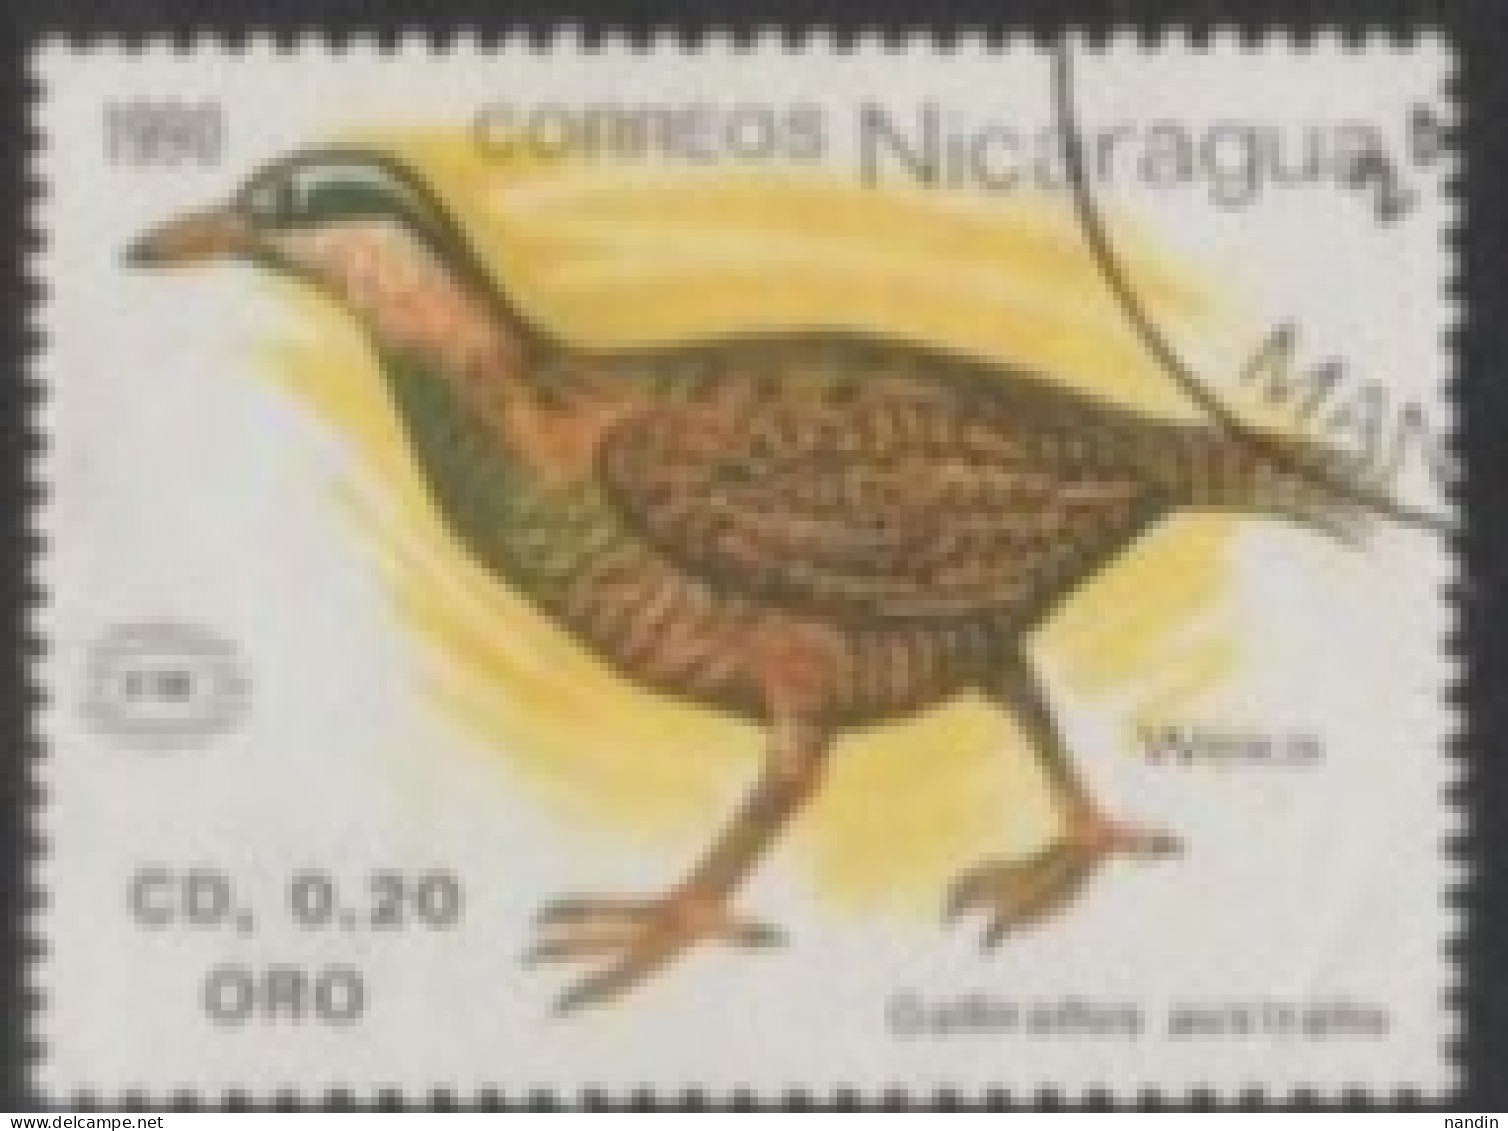 1990 NICARAGUA USED STAMP ON BIRDS/Gallirallus Australis-Genus Of Rails/Int. Stamp Exhibition "NEW ZEALAND '90" BIRD - Kolibries